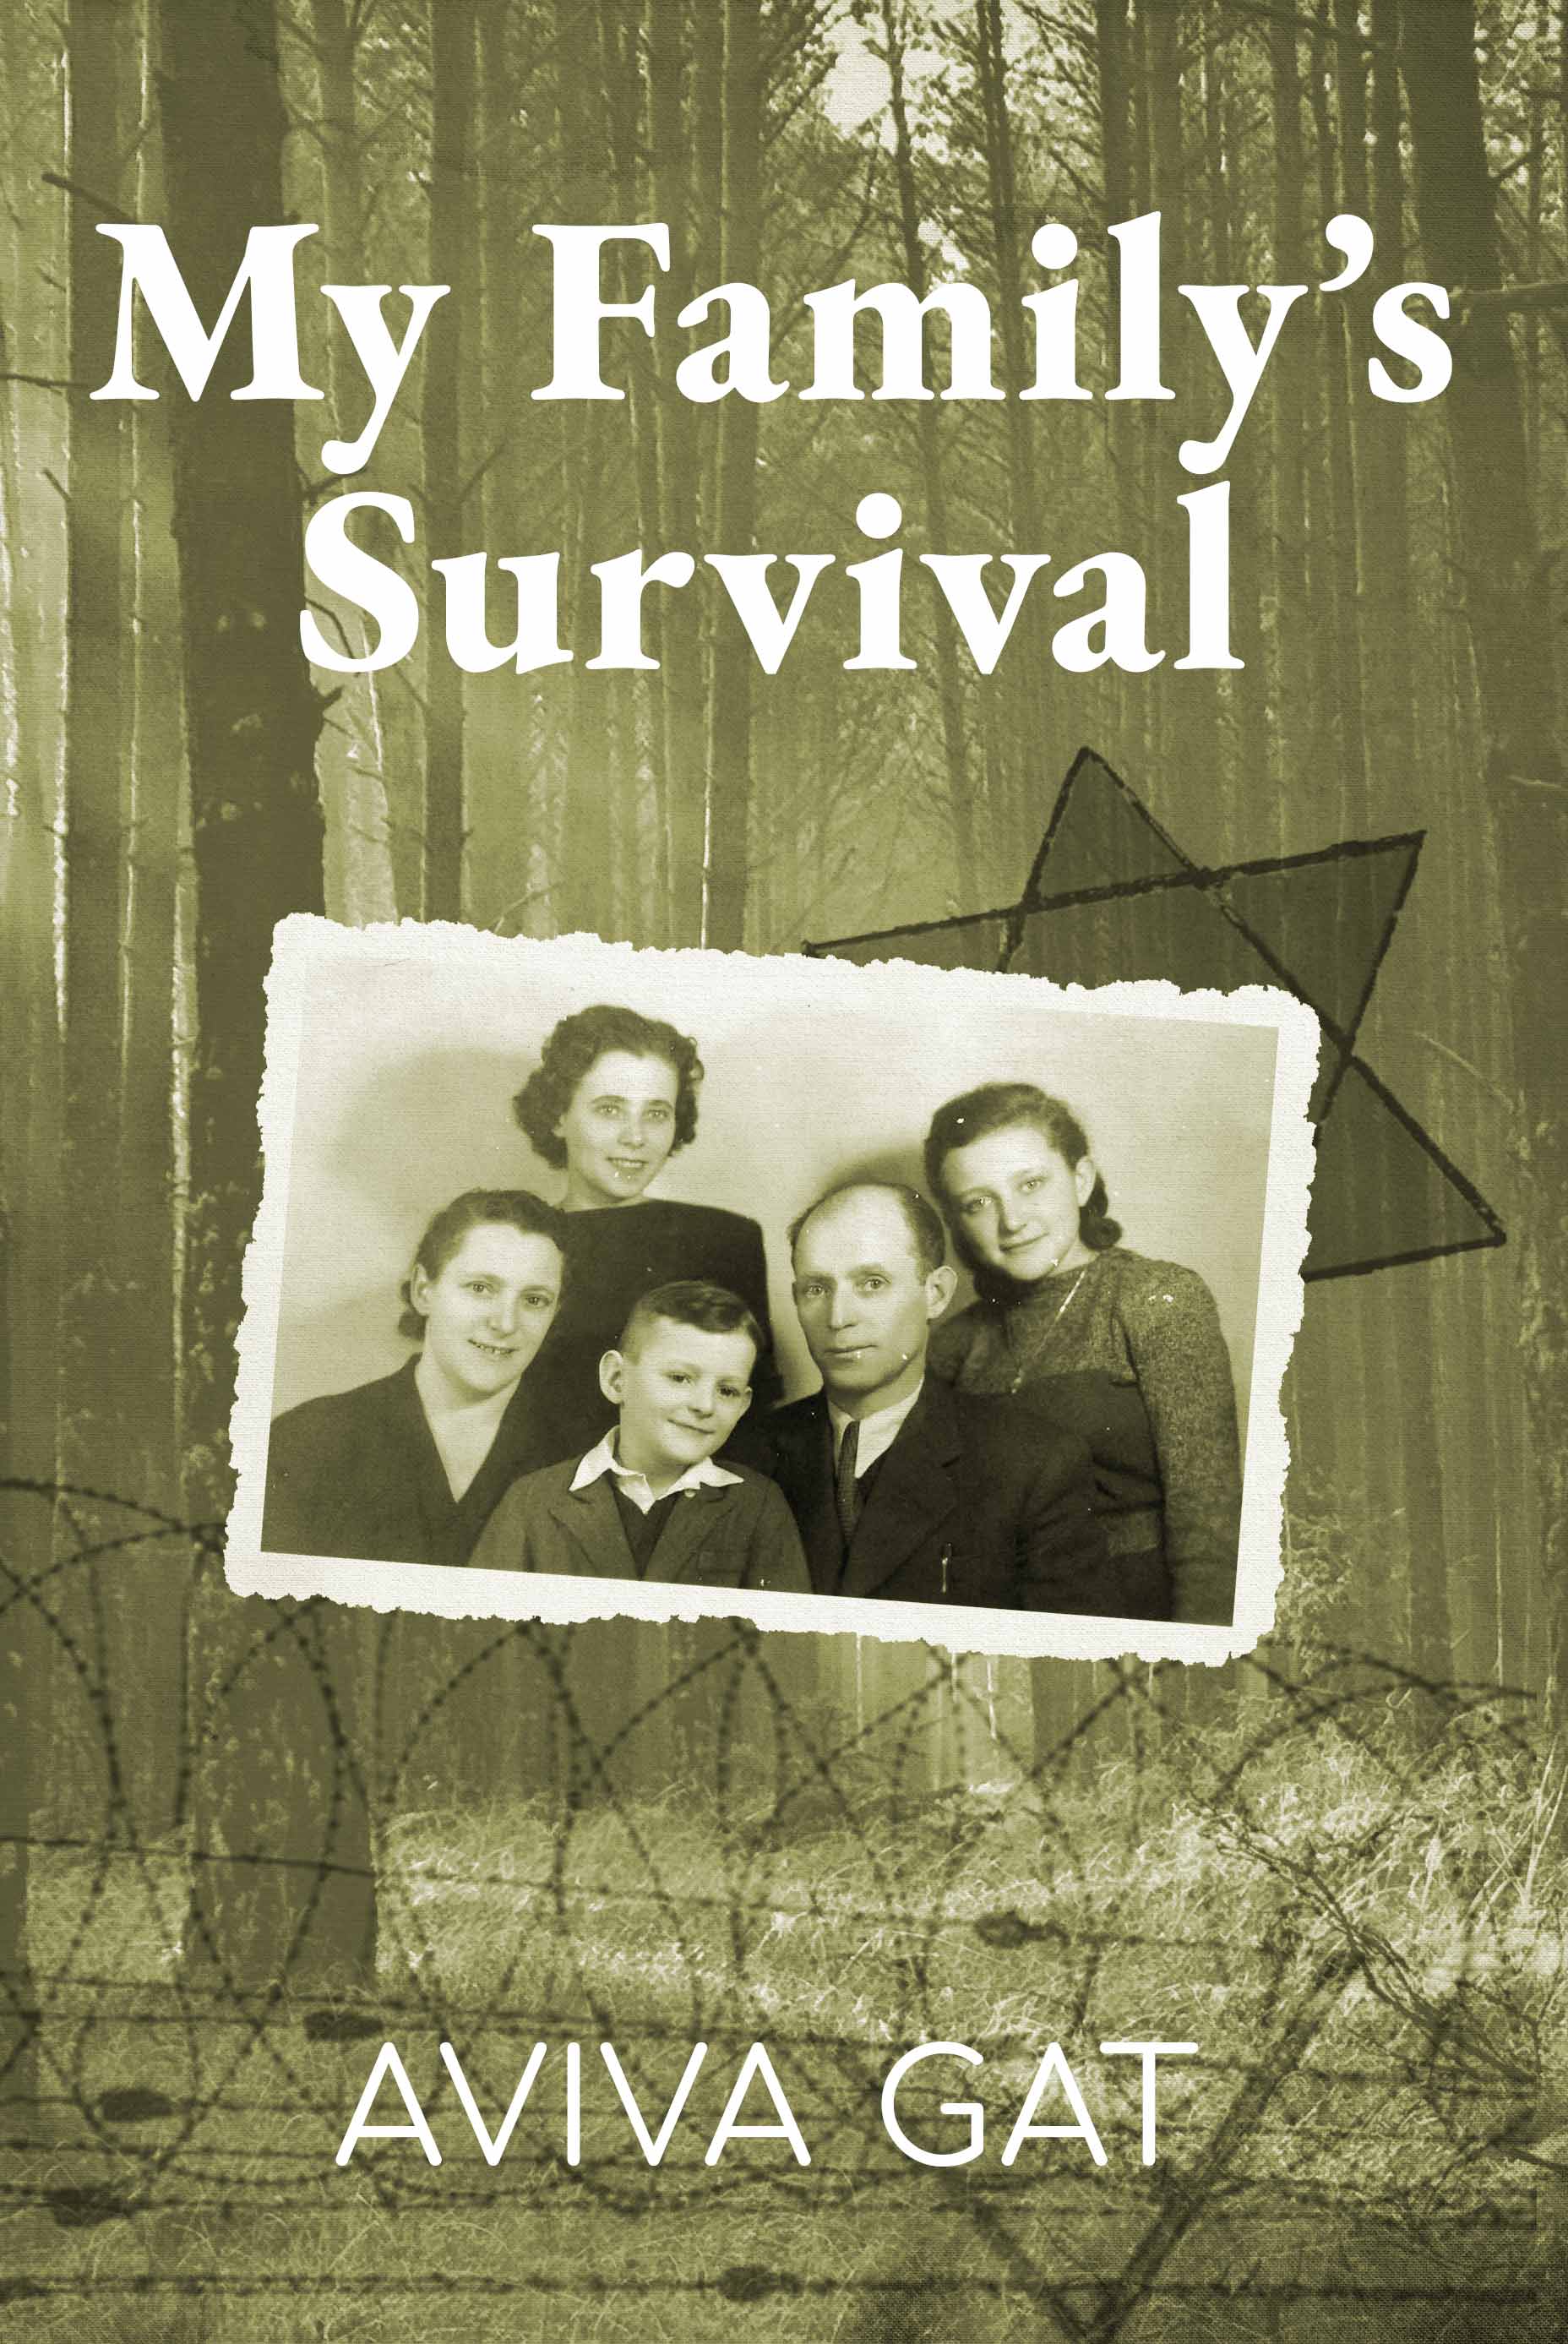 FREE: My Family’s Survival by Aviva Gat